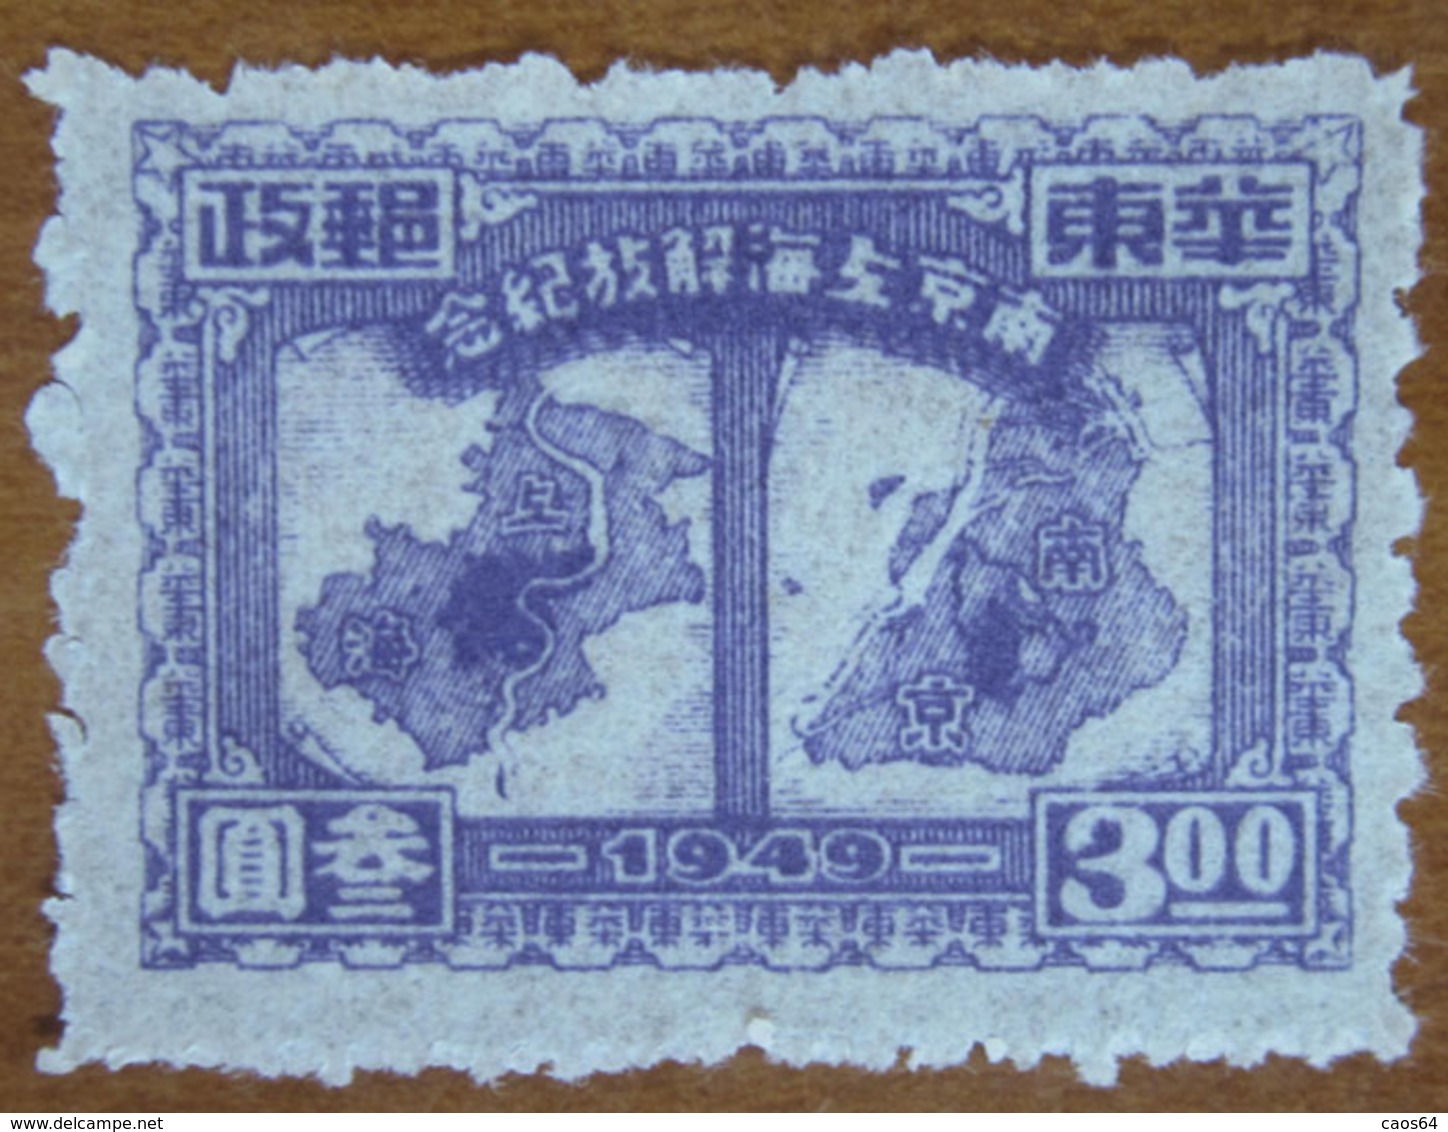 1949 CINA Orientale MAPS OF SHANGHAI AND NANKING - Valore 300 Nuovo - Ostchina 1949-50